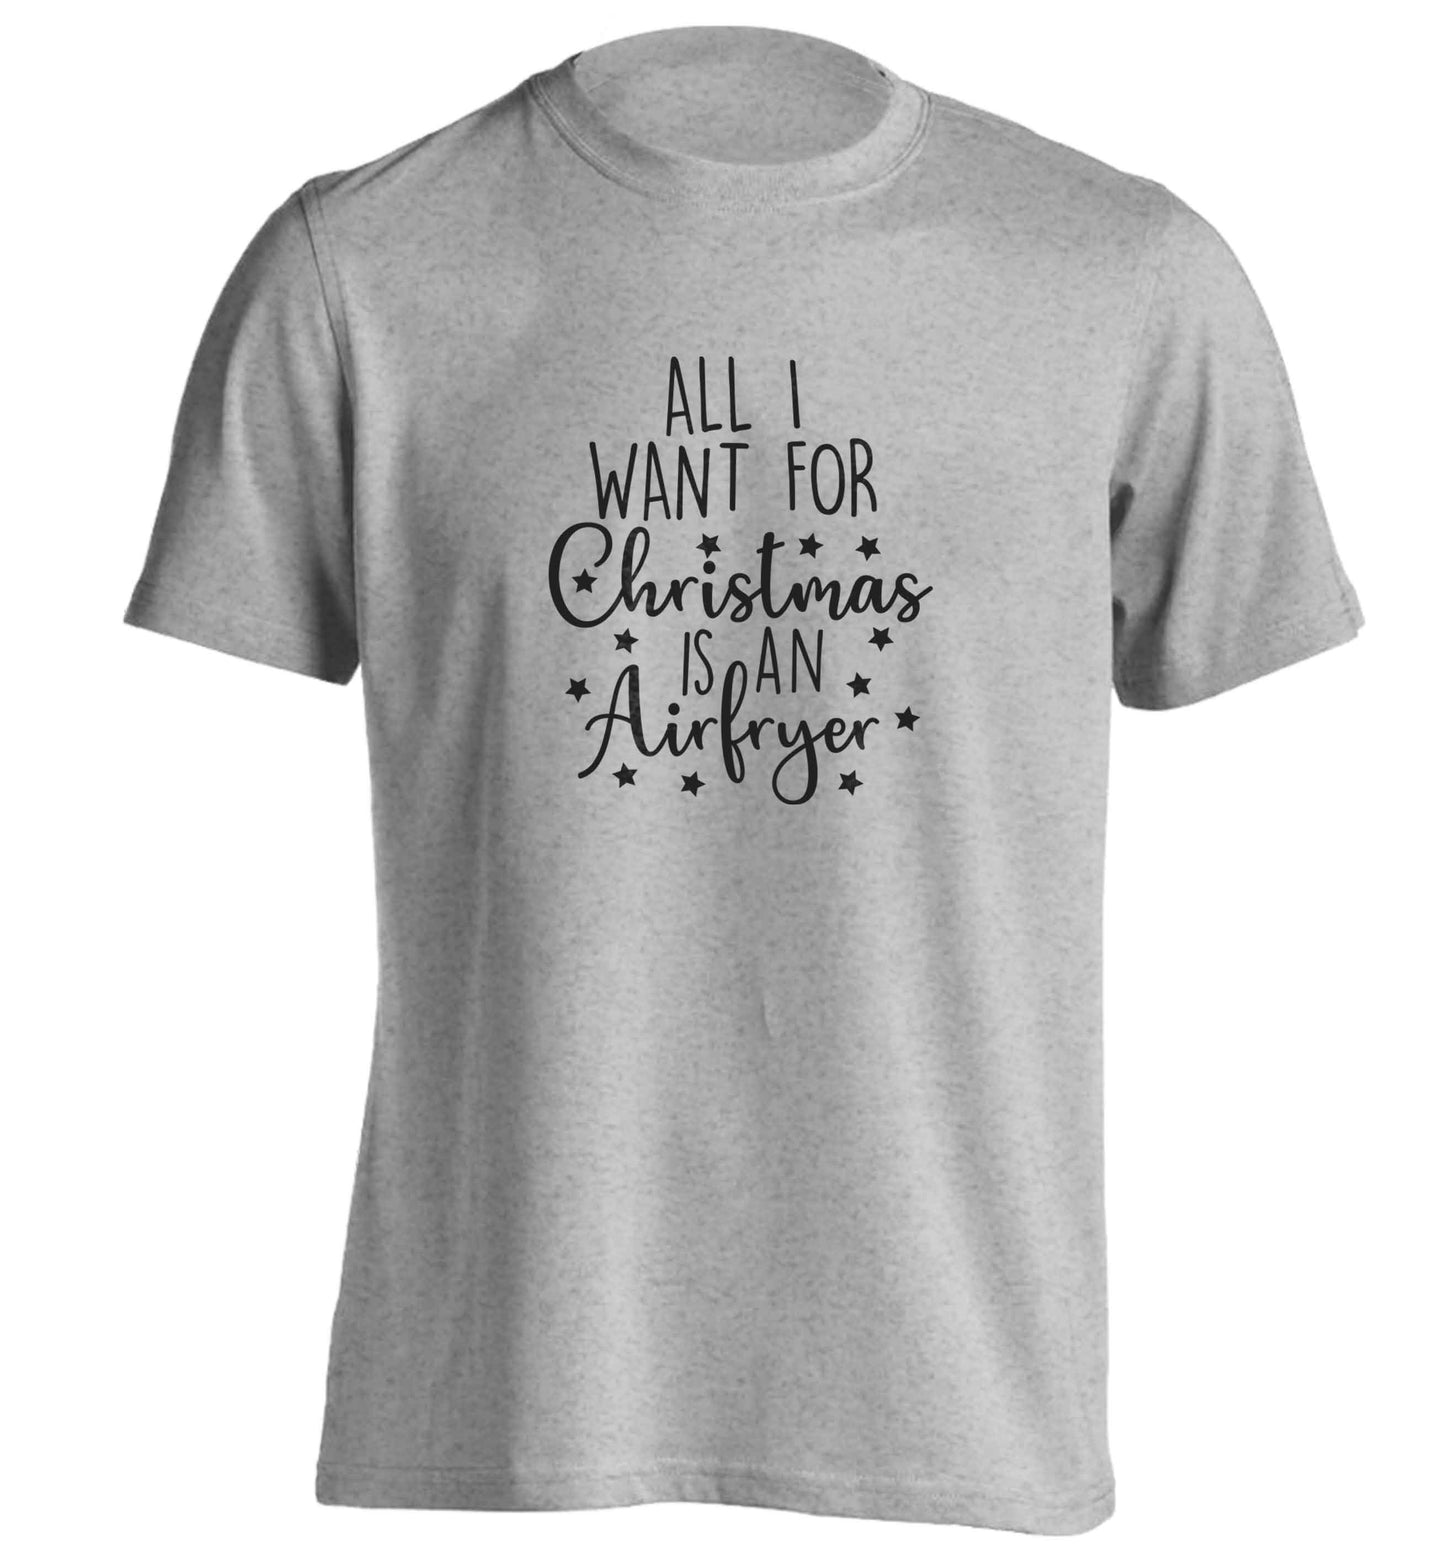 All I want for Christmas is an airfryeradults unisex grey Tshirt 2XL